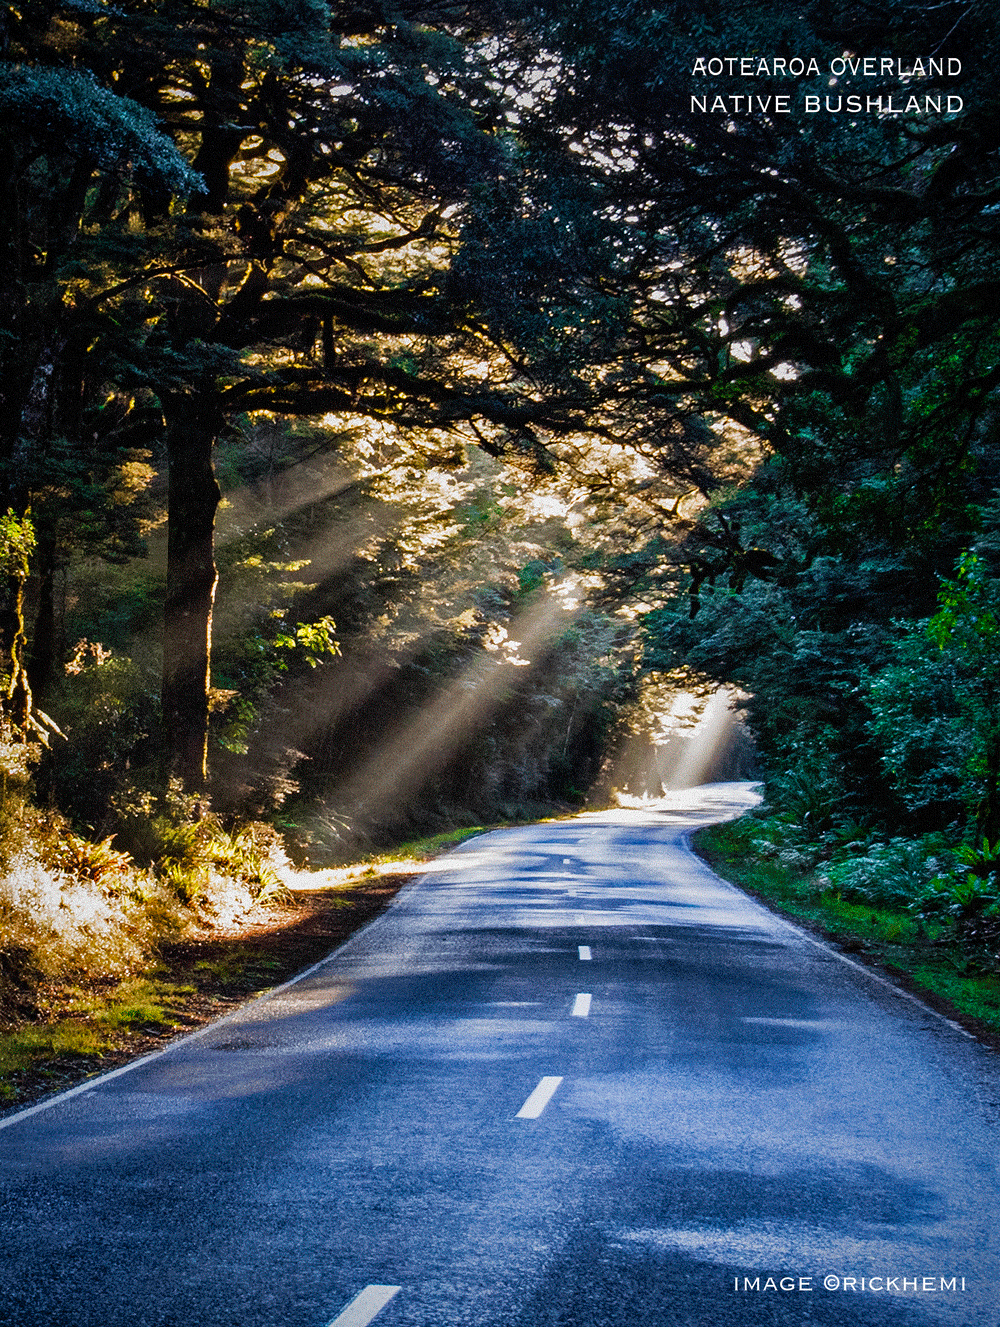 solo overland road journey north to south Aotearoa (NZ), native bushland image by Rick Hemi